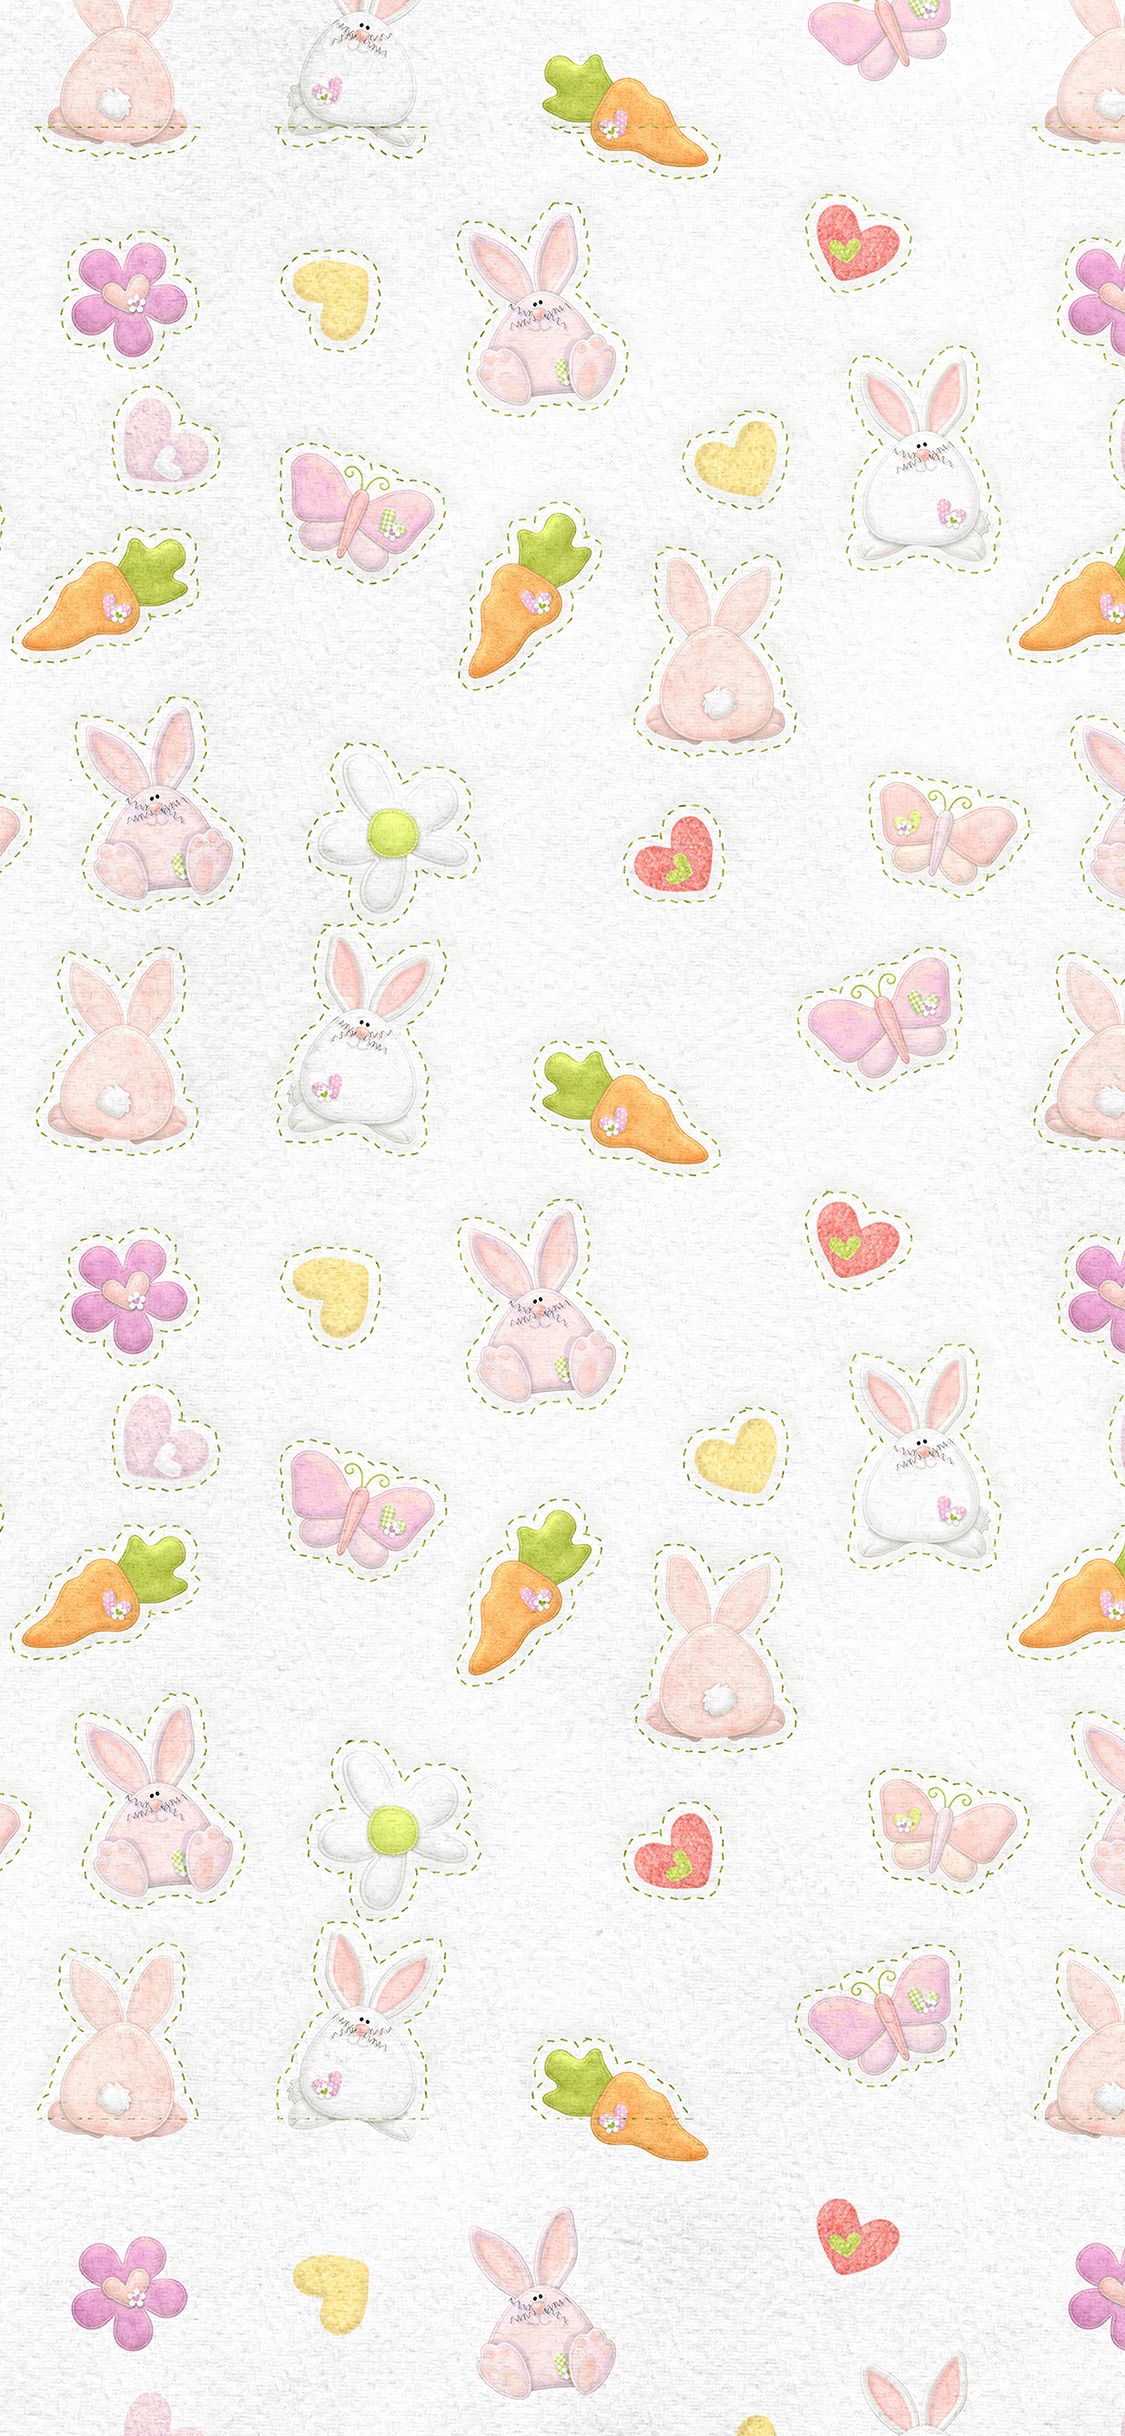 iPhone X wallpaper. cute rabbit chracter pattern